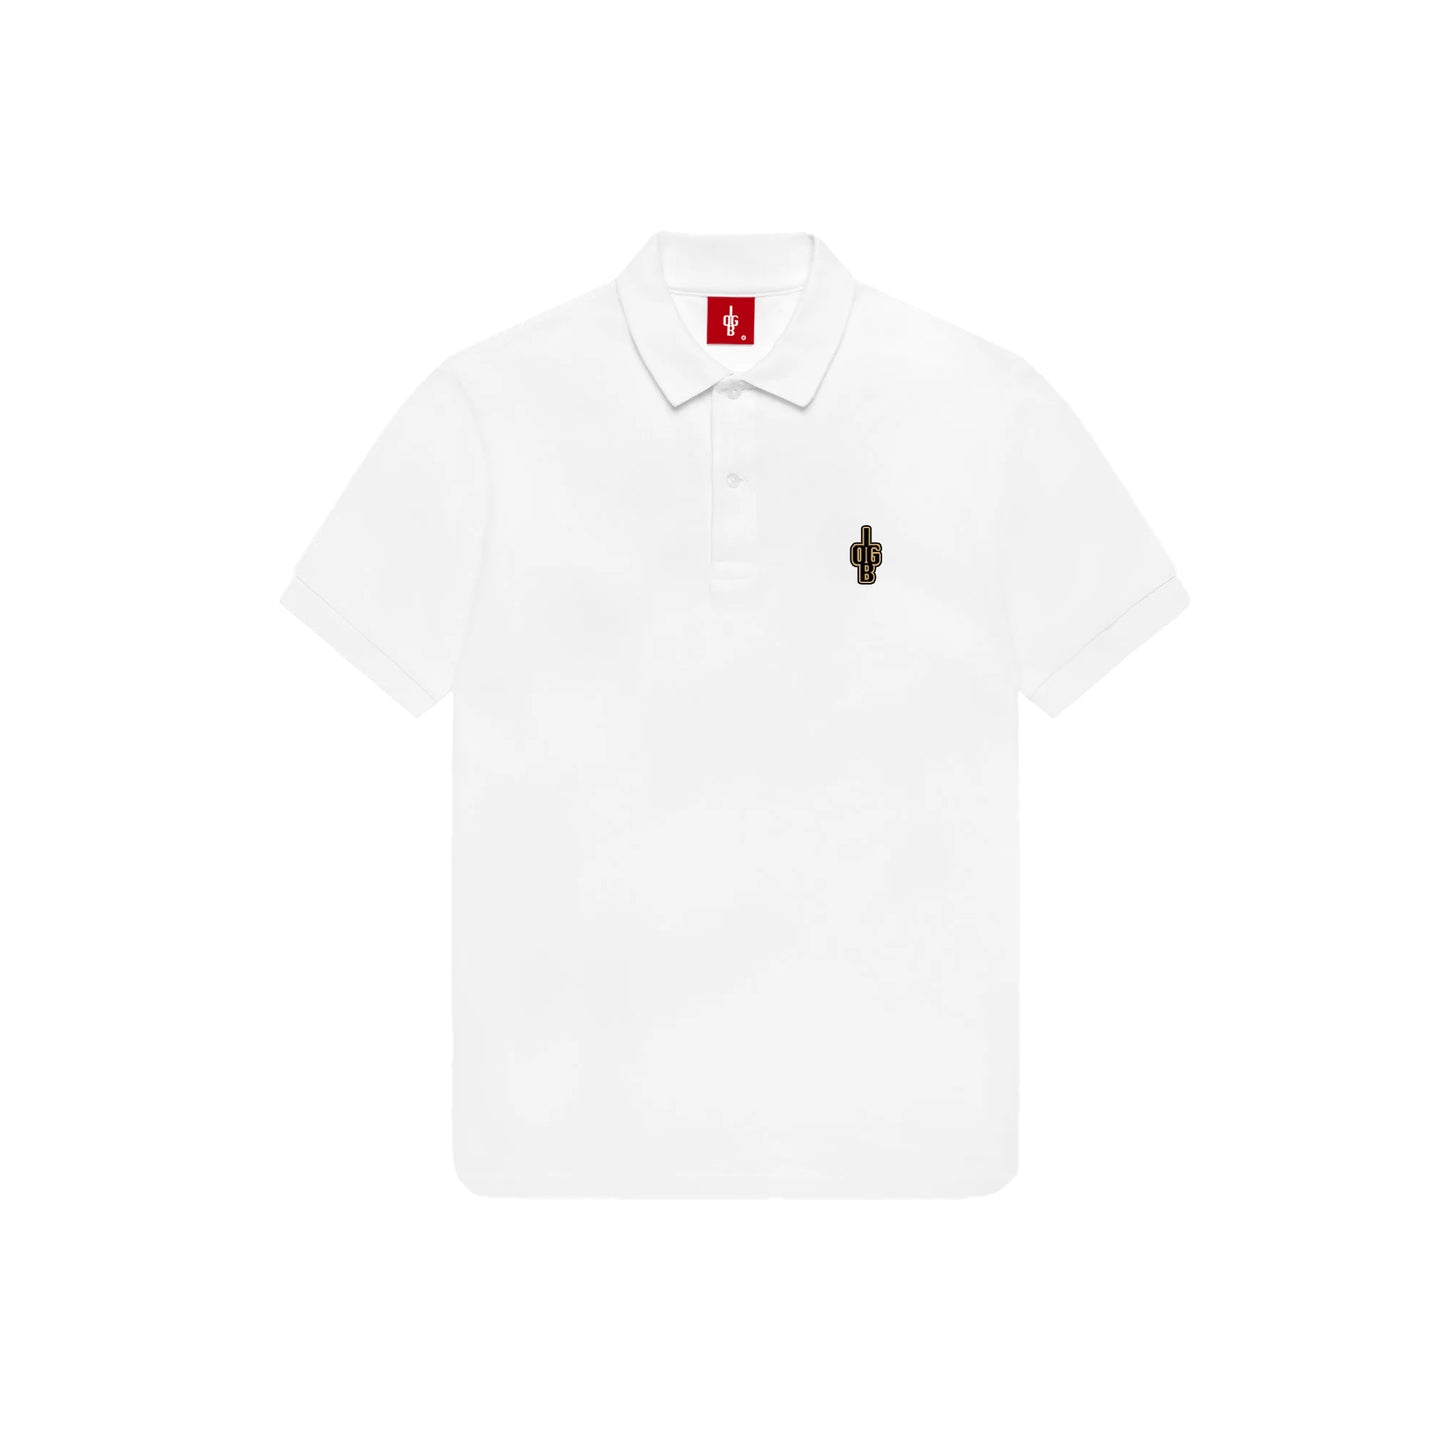 'IOGB' Polo T-Shirt